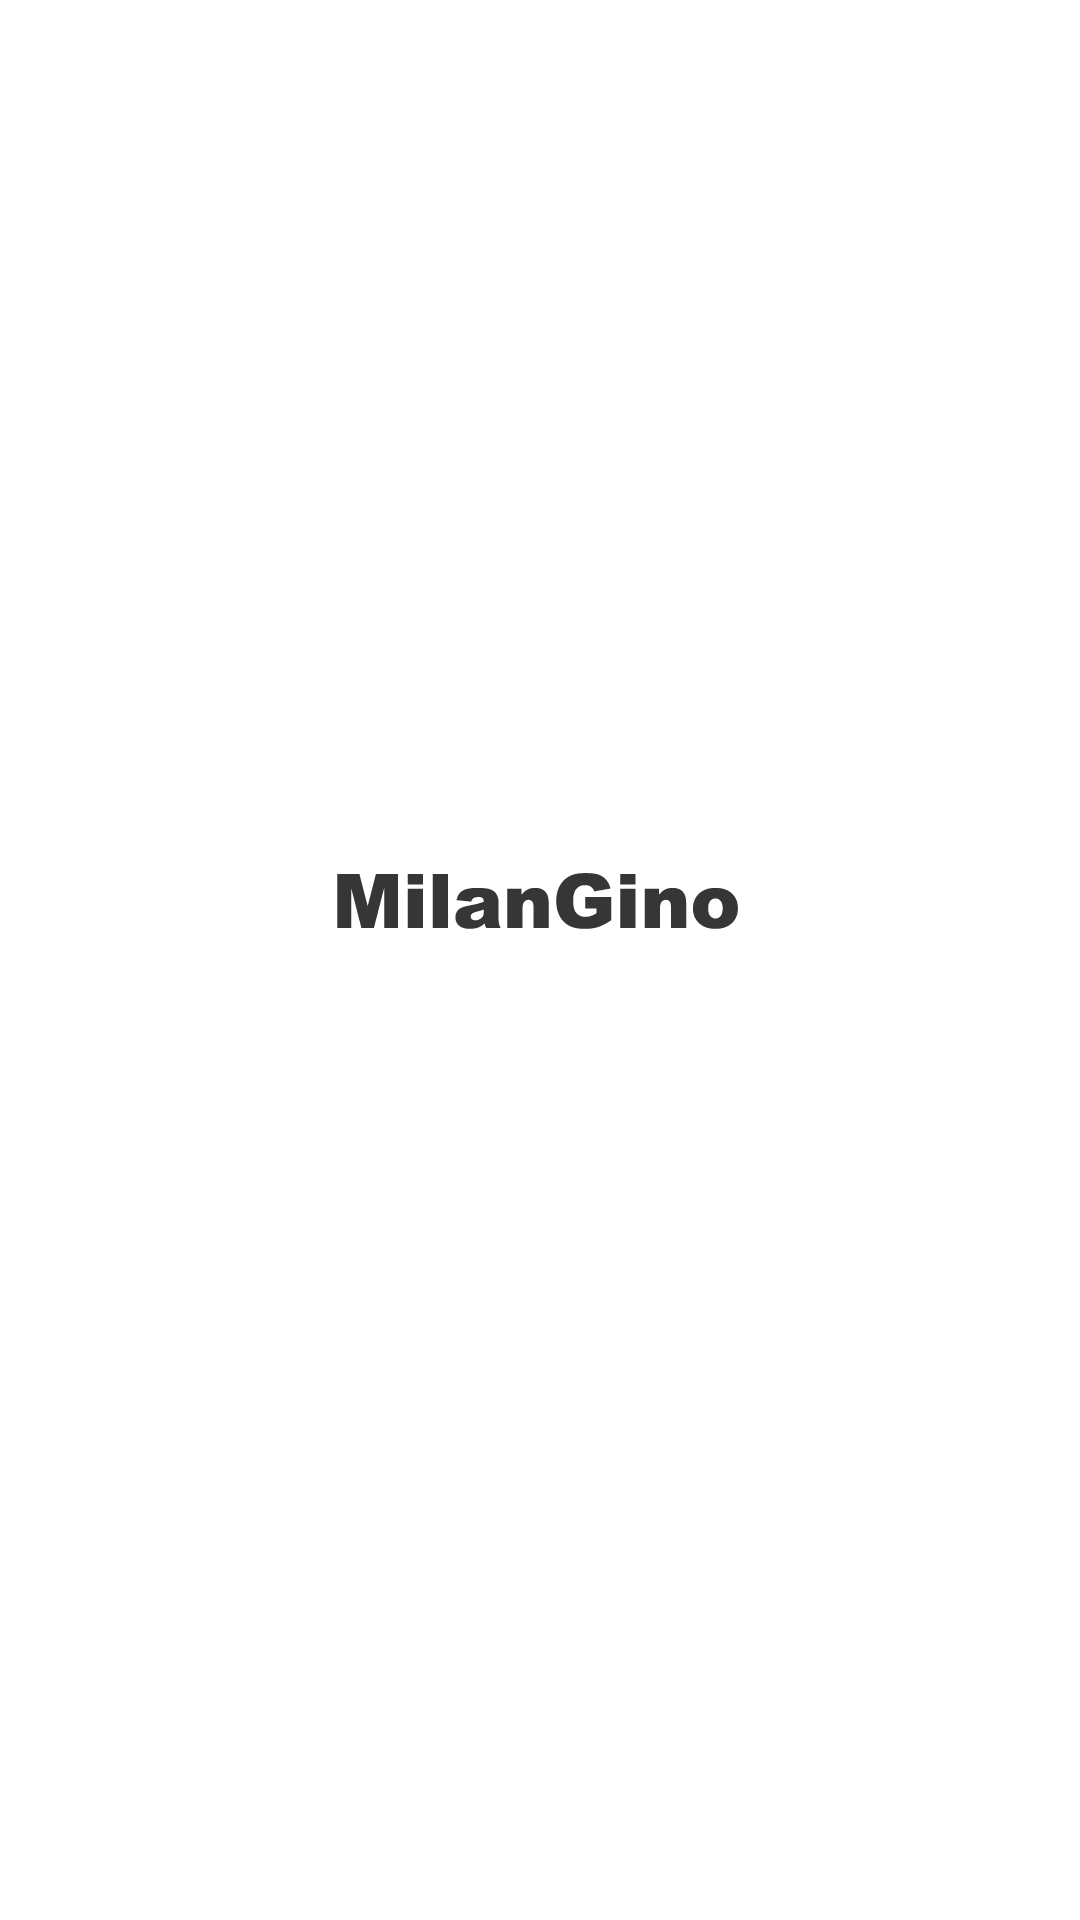 Milangino